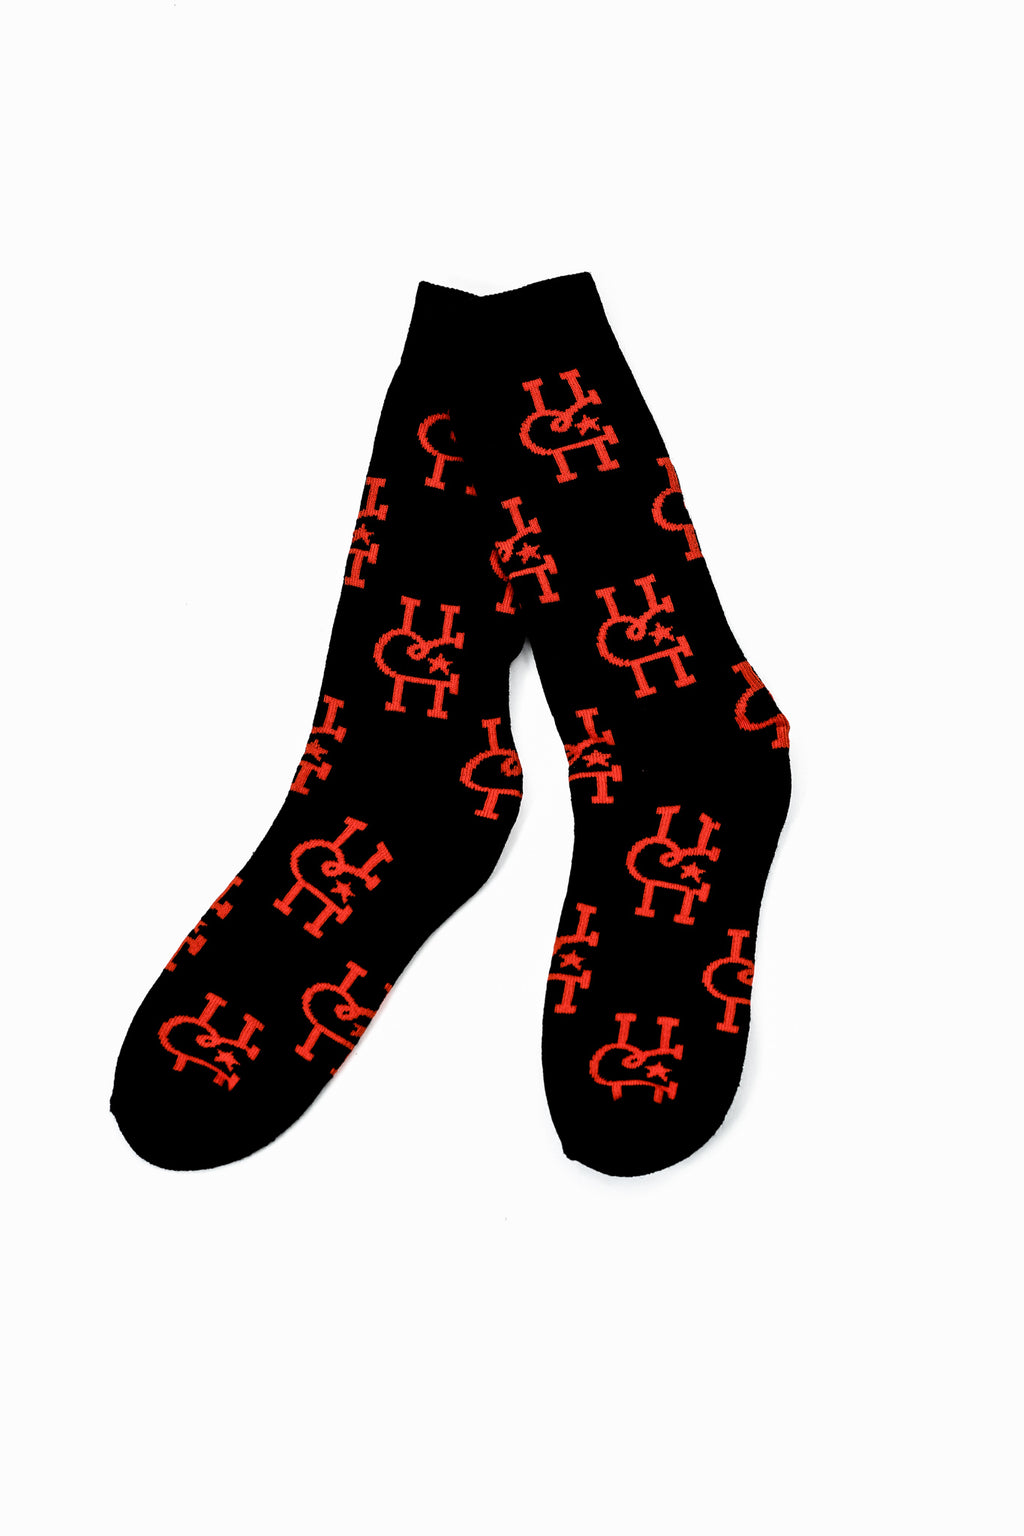 HR Black~Red Socks